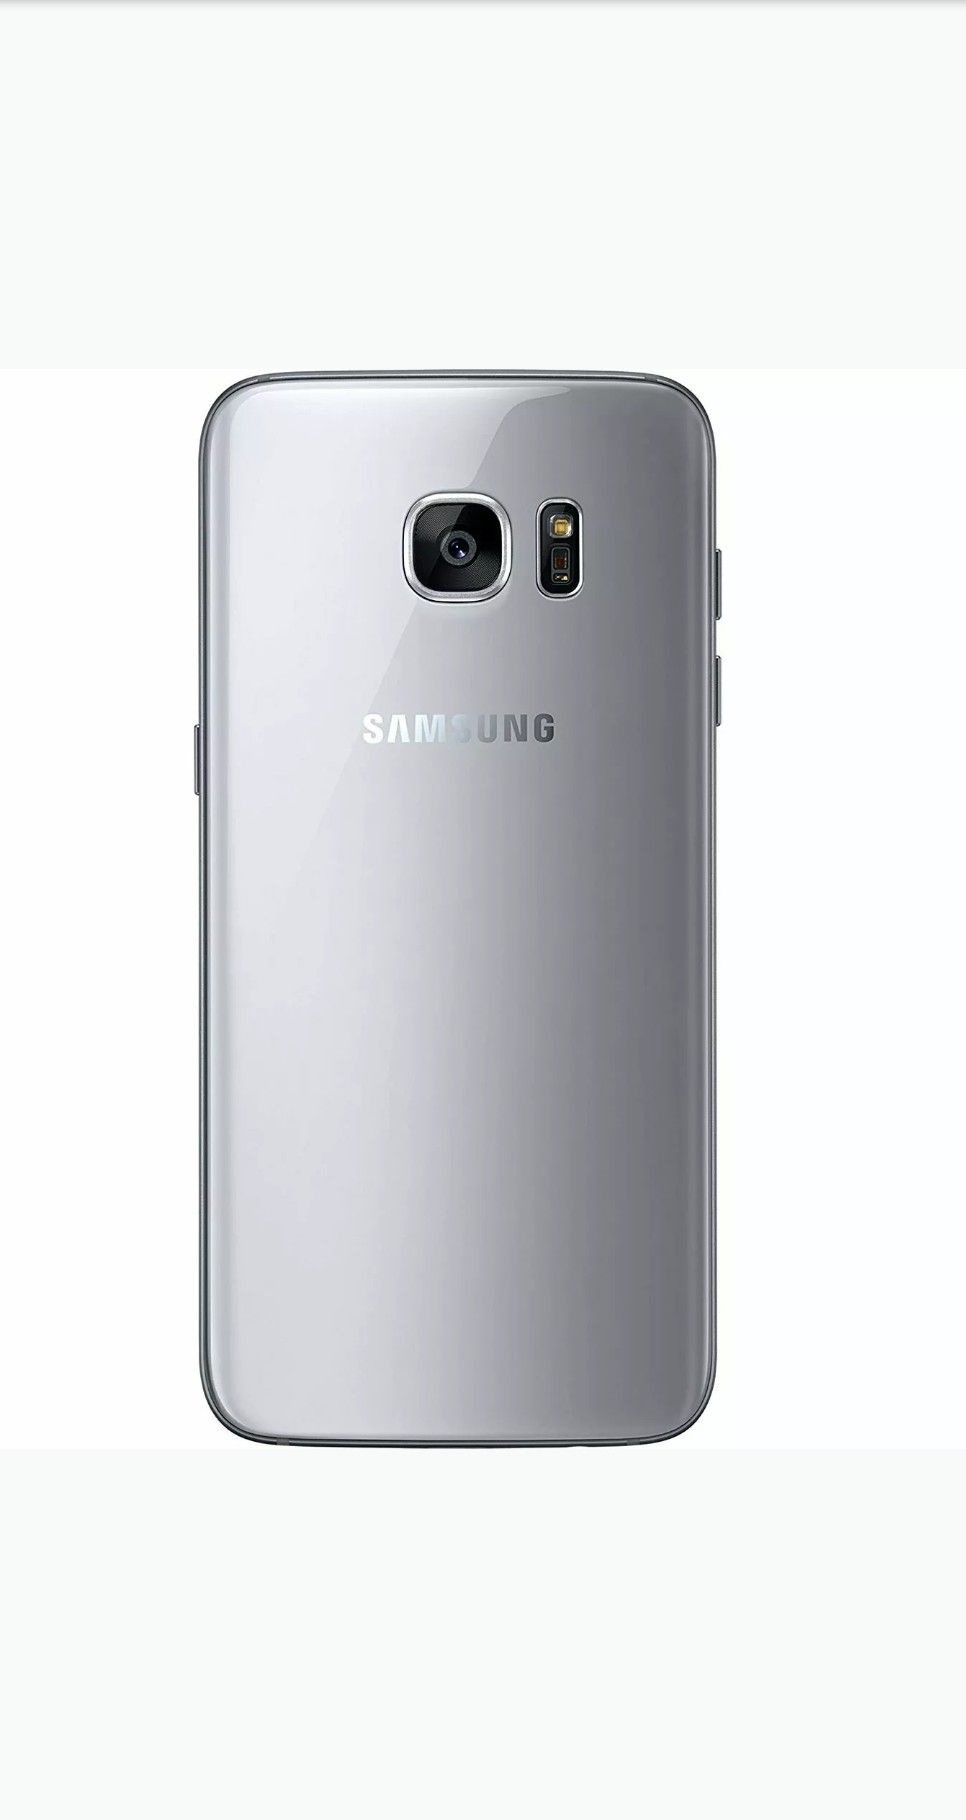 Samsung Galaxy S7 edge 32G unlocked... Desbloqueado